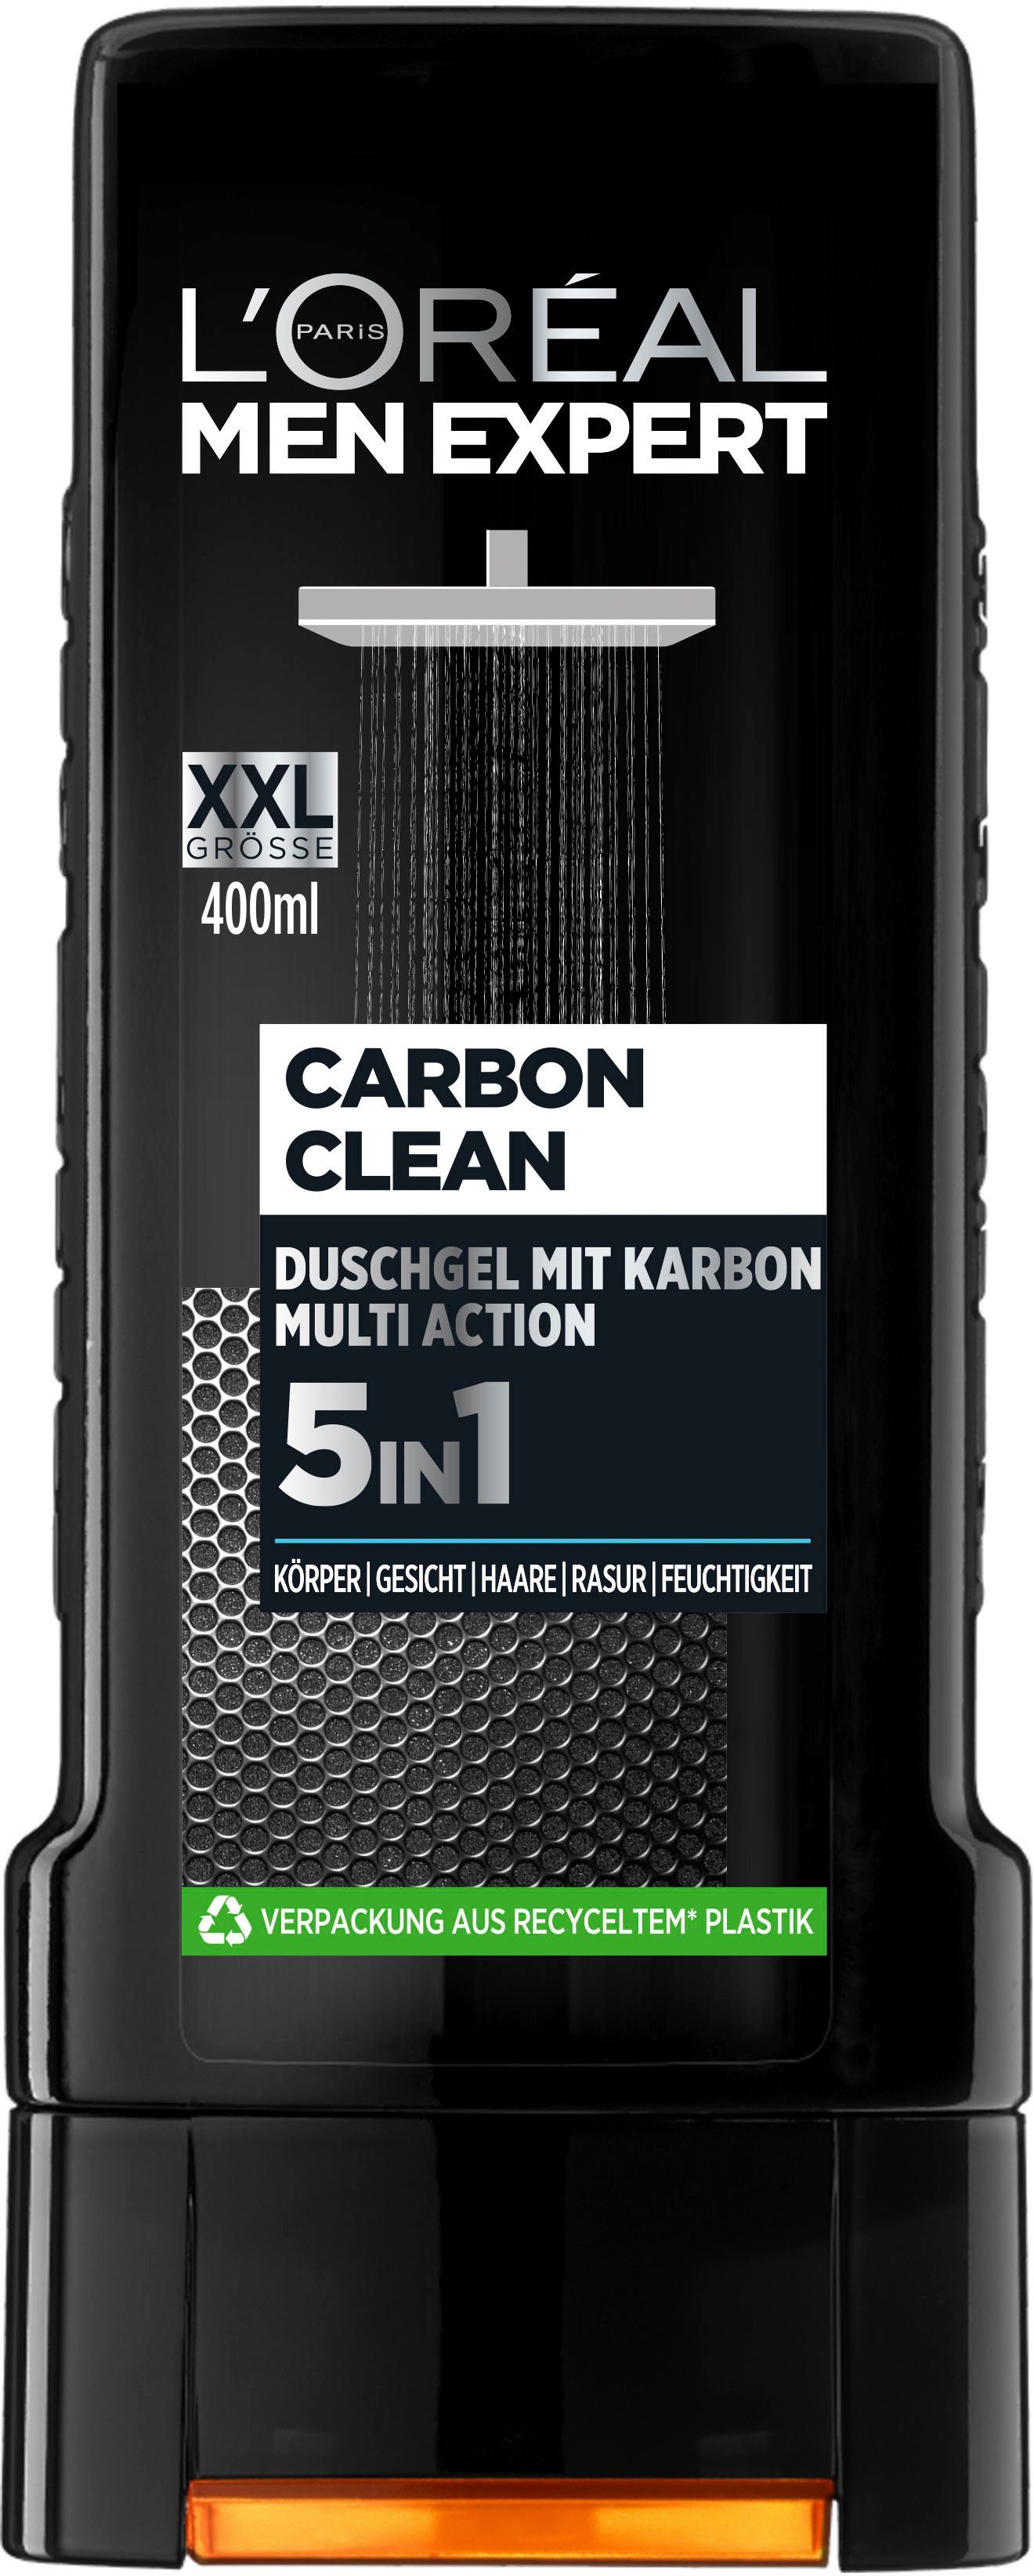 L'ORÉAL PARIS MEN EXPERT Duschgel Carbon Clean 5in1 XXL | Duschgele